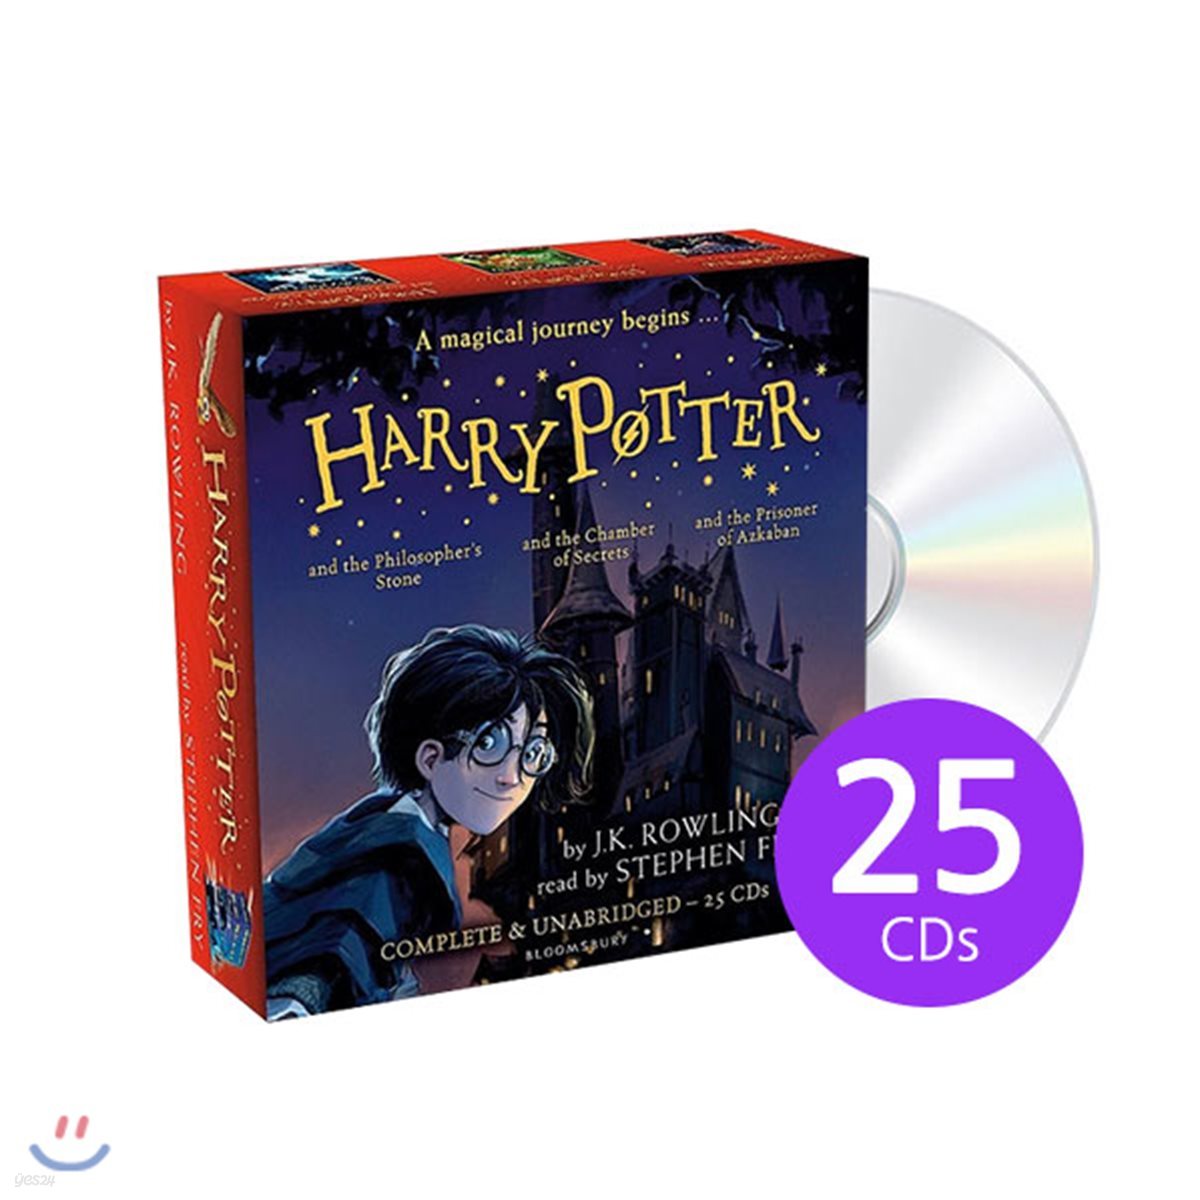 Harry Potter Books 1-3 : Audio CD Collection (영국판) : 해리포터 1,2,3권 오디오북 박스 세트 (오디오 CD 25장)